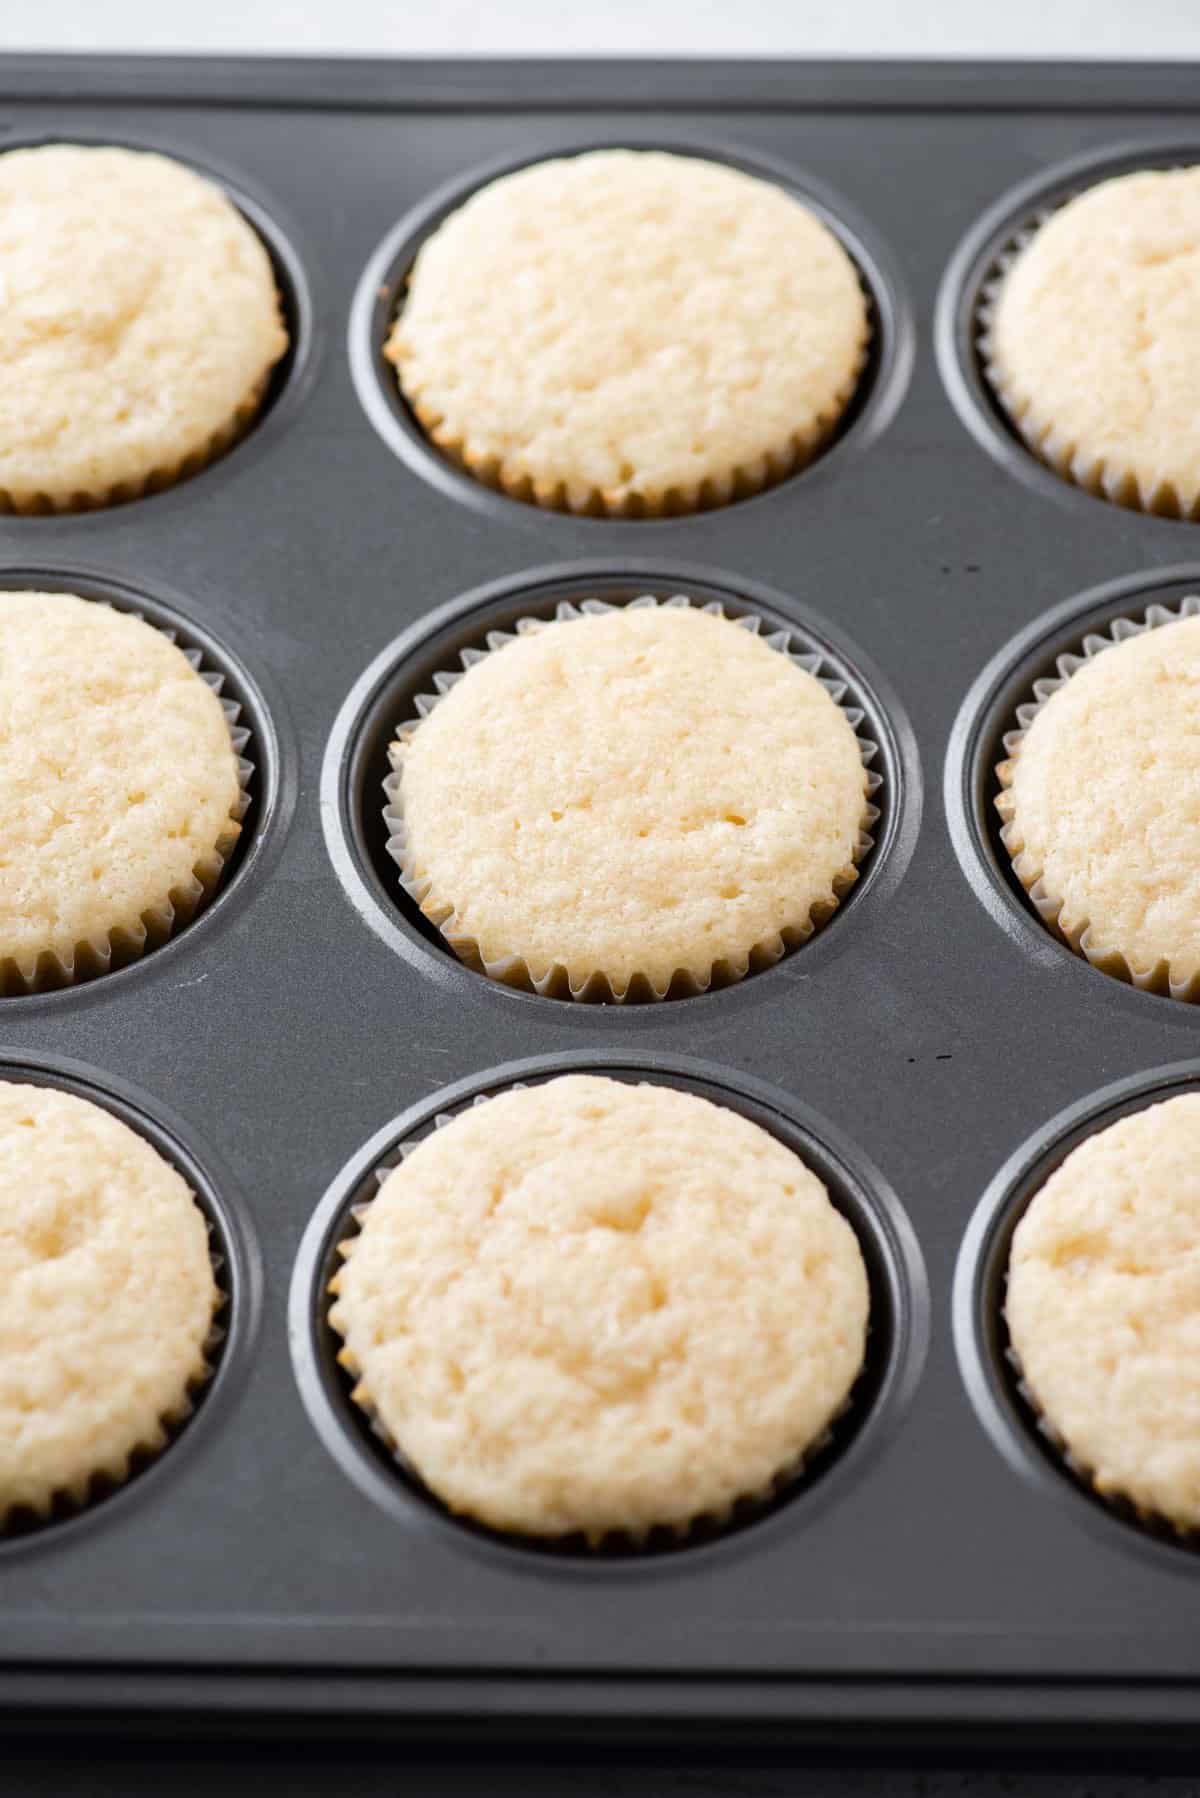 Gluten-free cupcakes in pan after baking